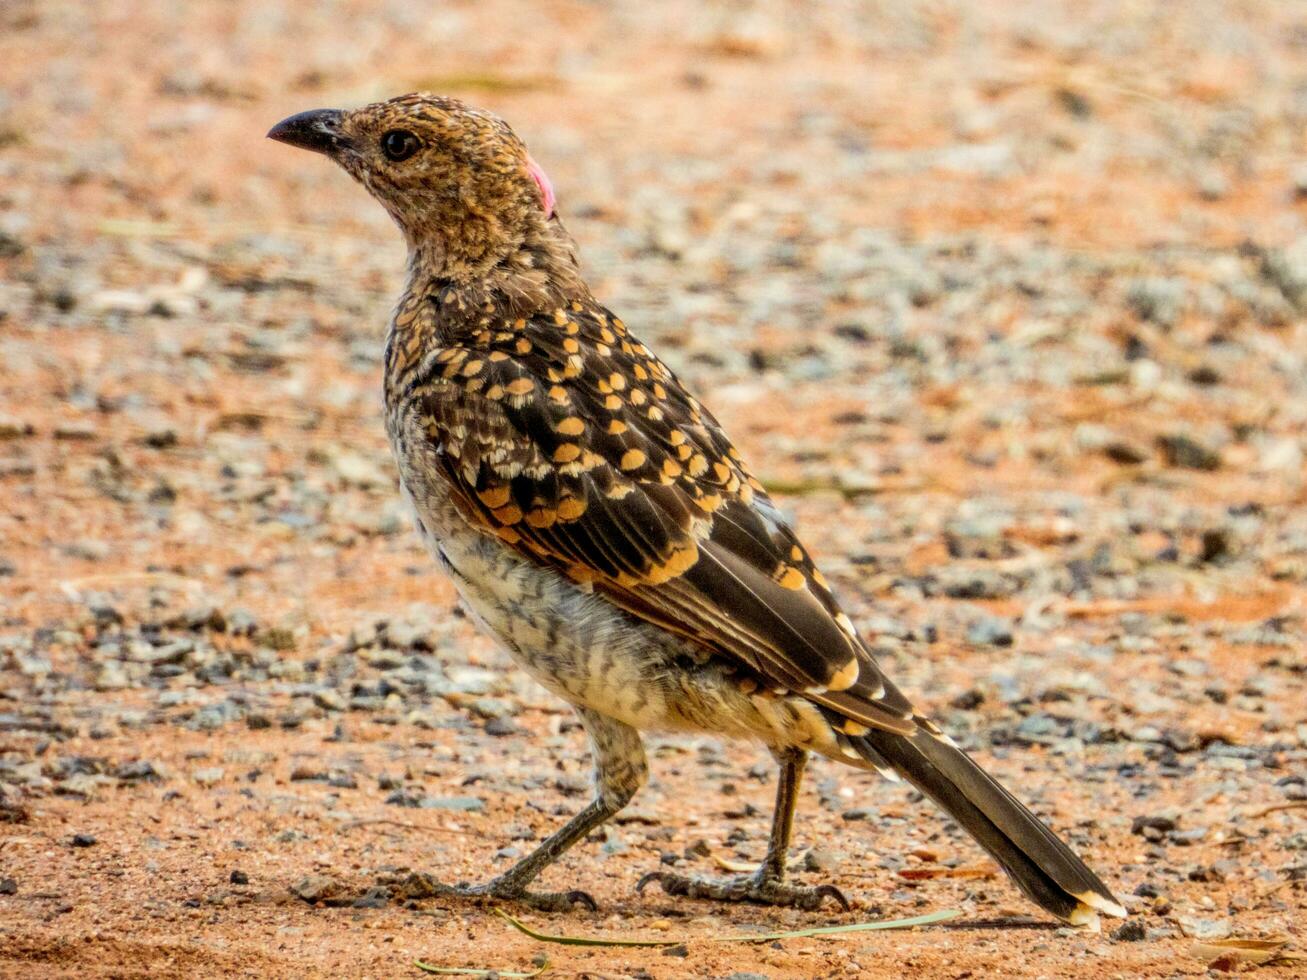 Spotted Bowerbird in Australia photo